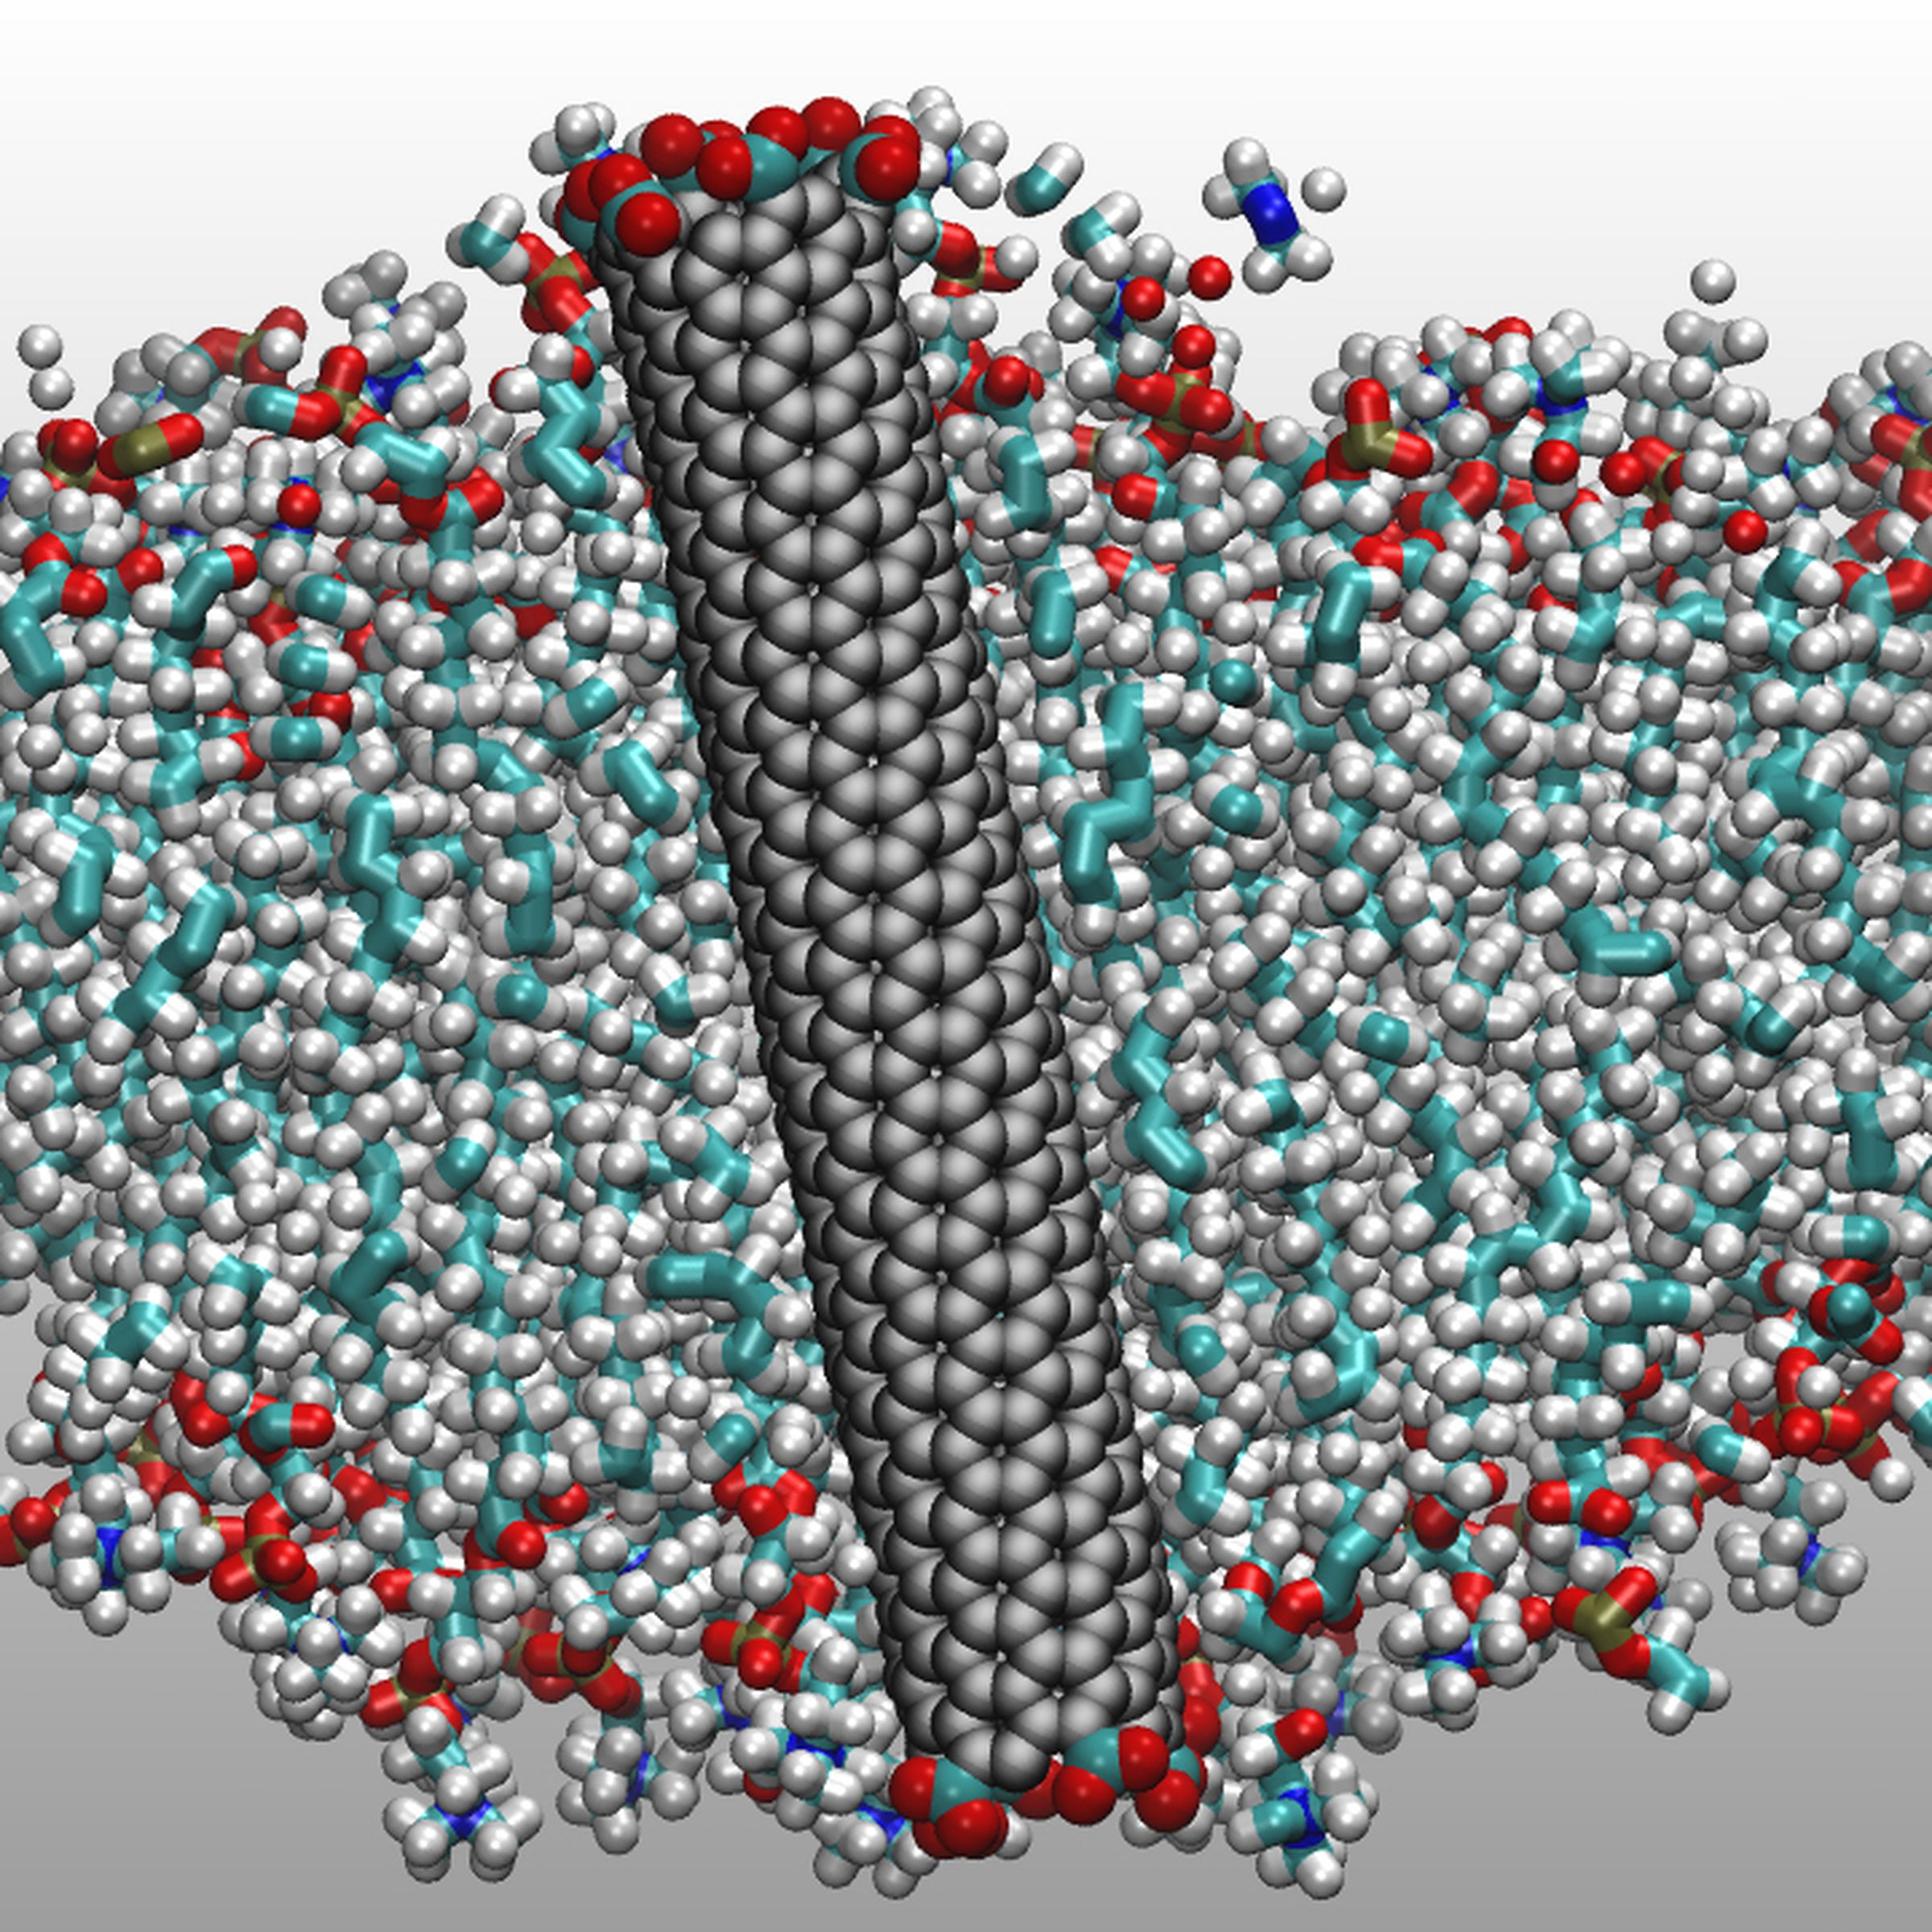 A computer representation of a carbon nanotube.